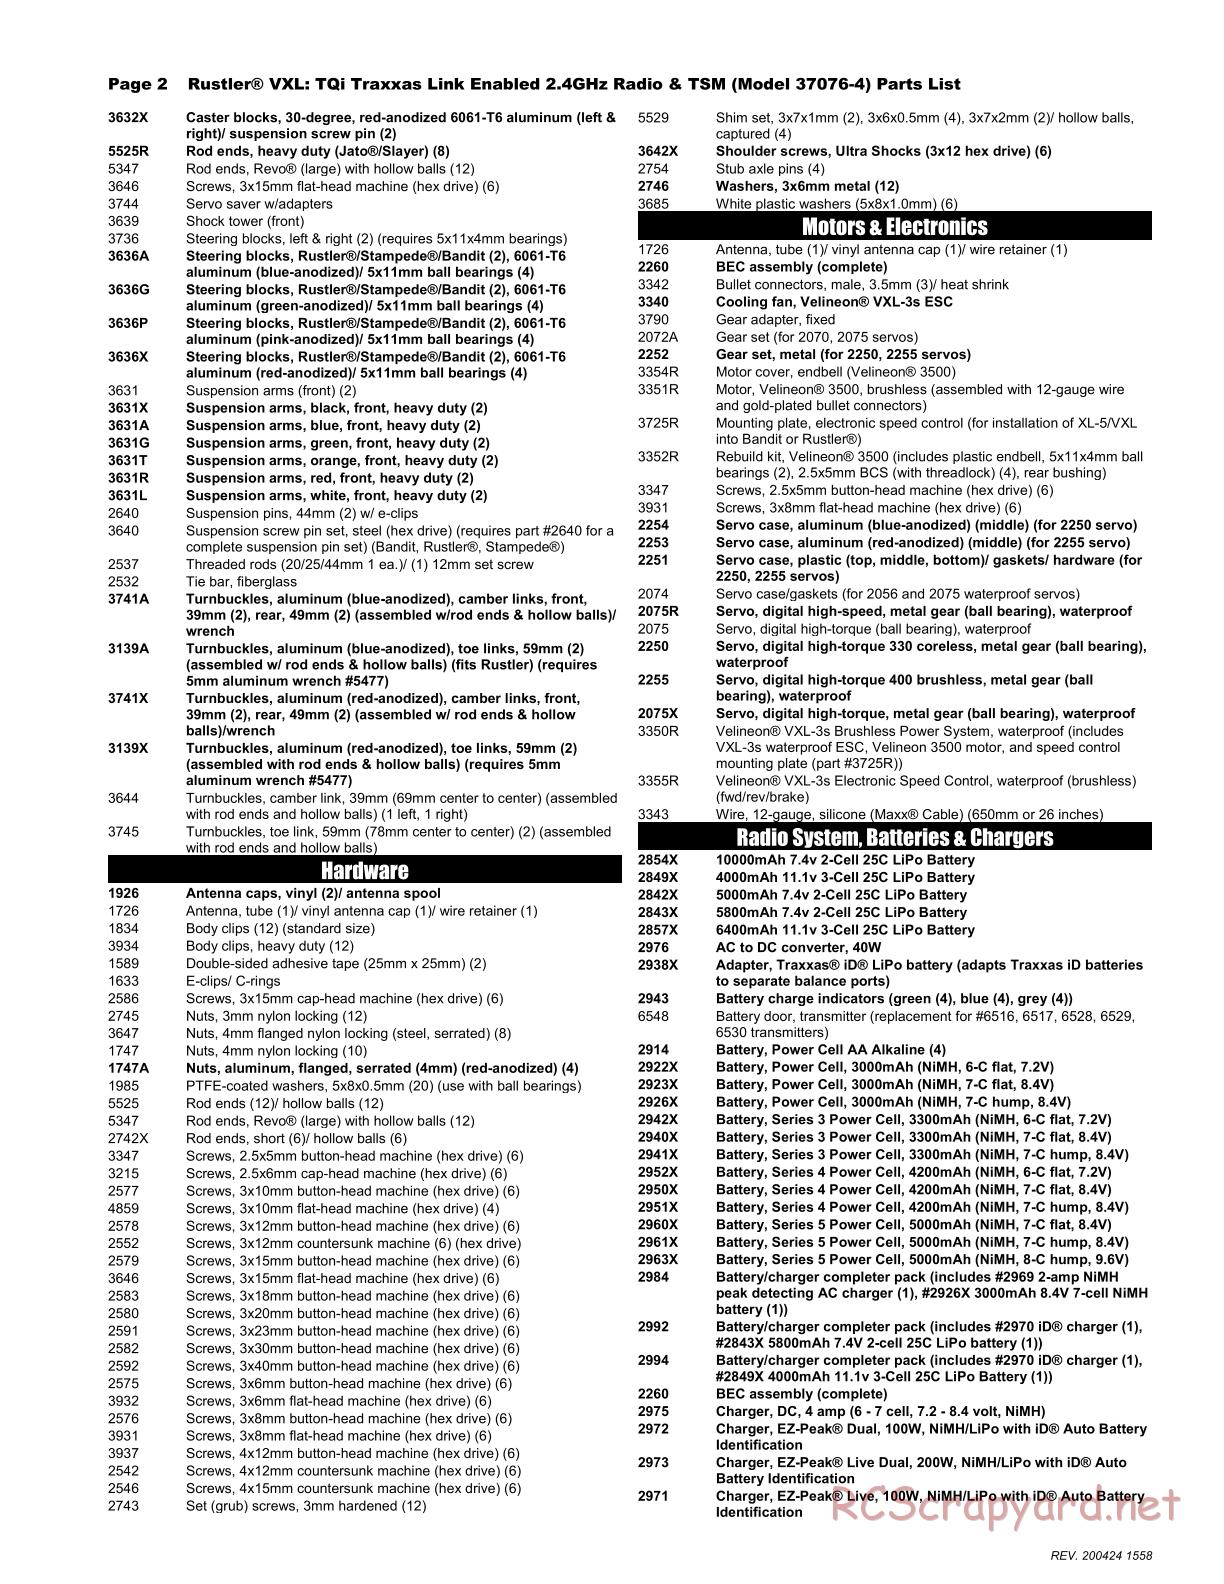 Traxxas - Rustler VXL TSM - Parts List - Page 2